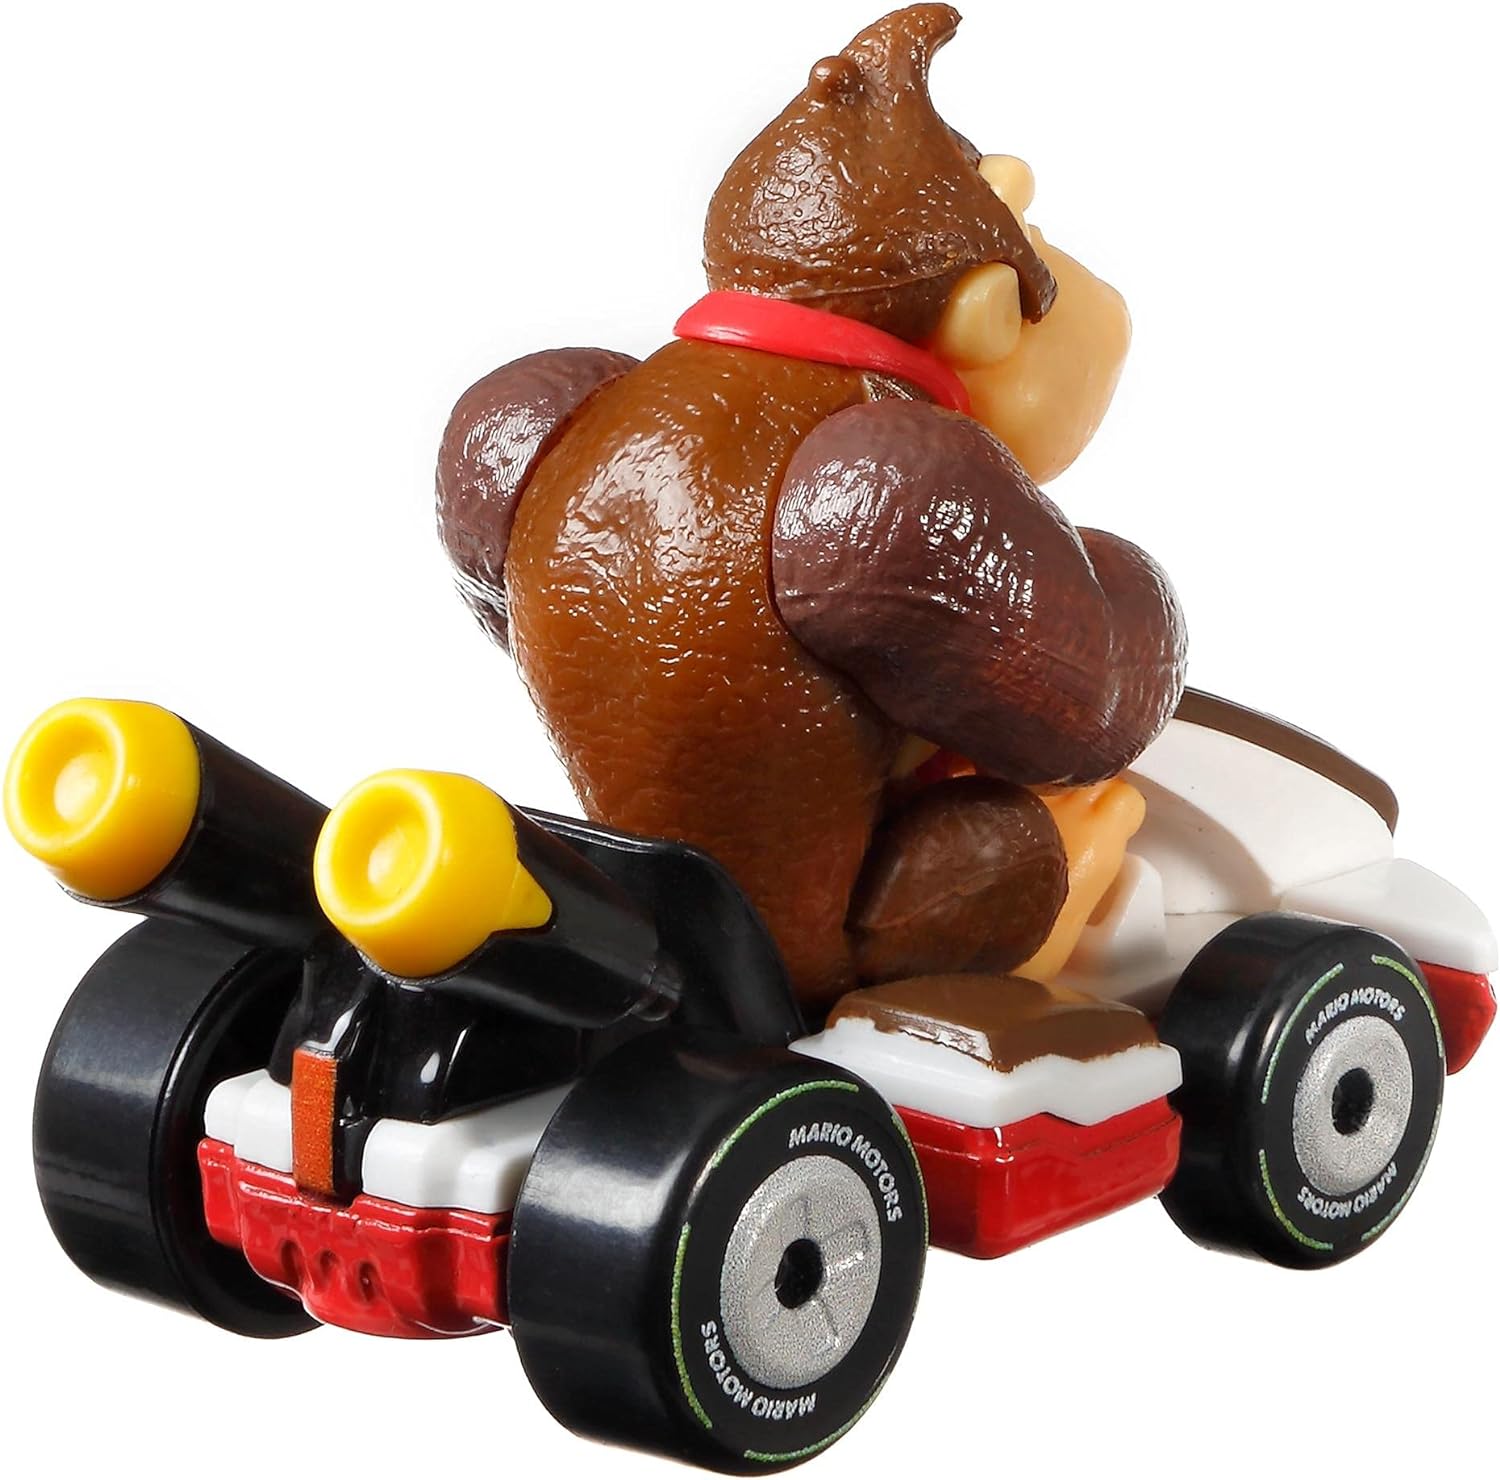 Mario Kart Hot Wheels - Donkey Kong (Standard Kart)